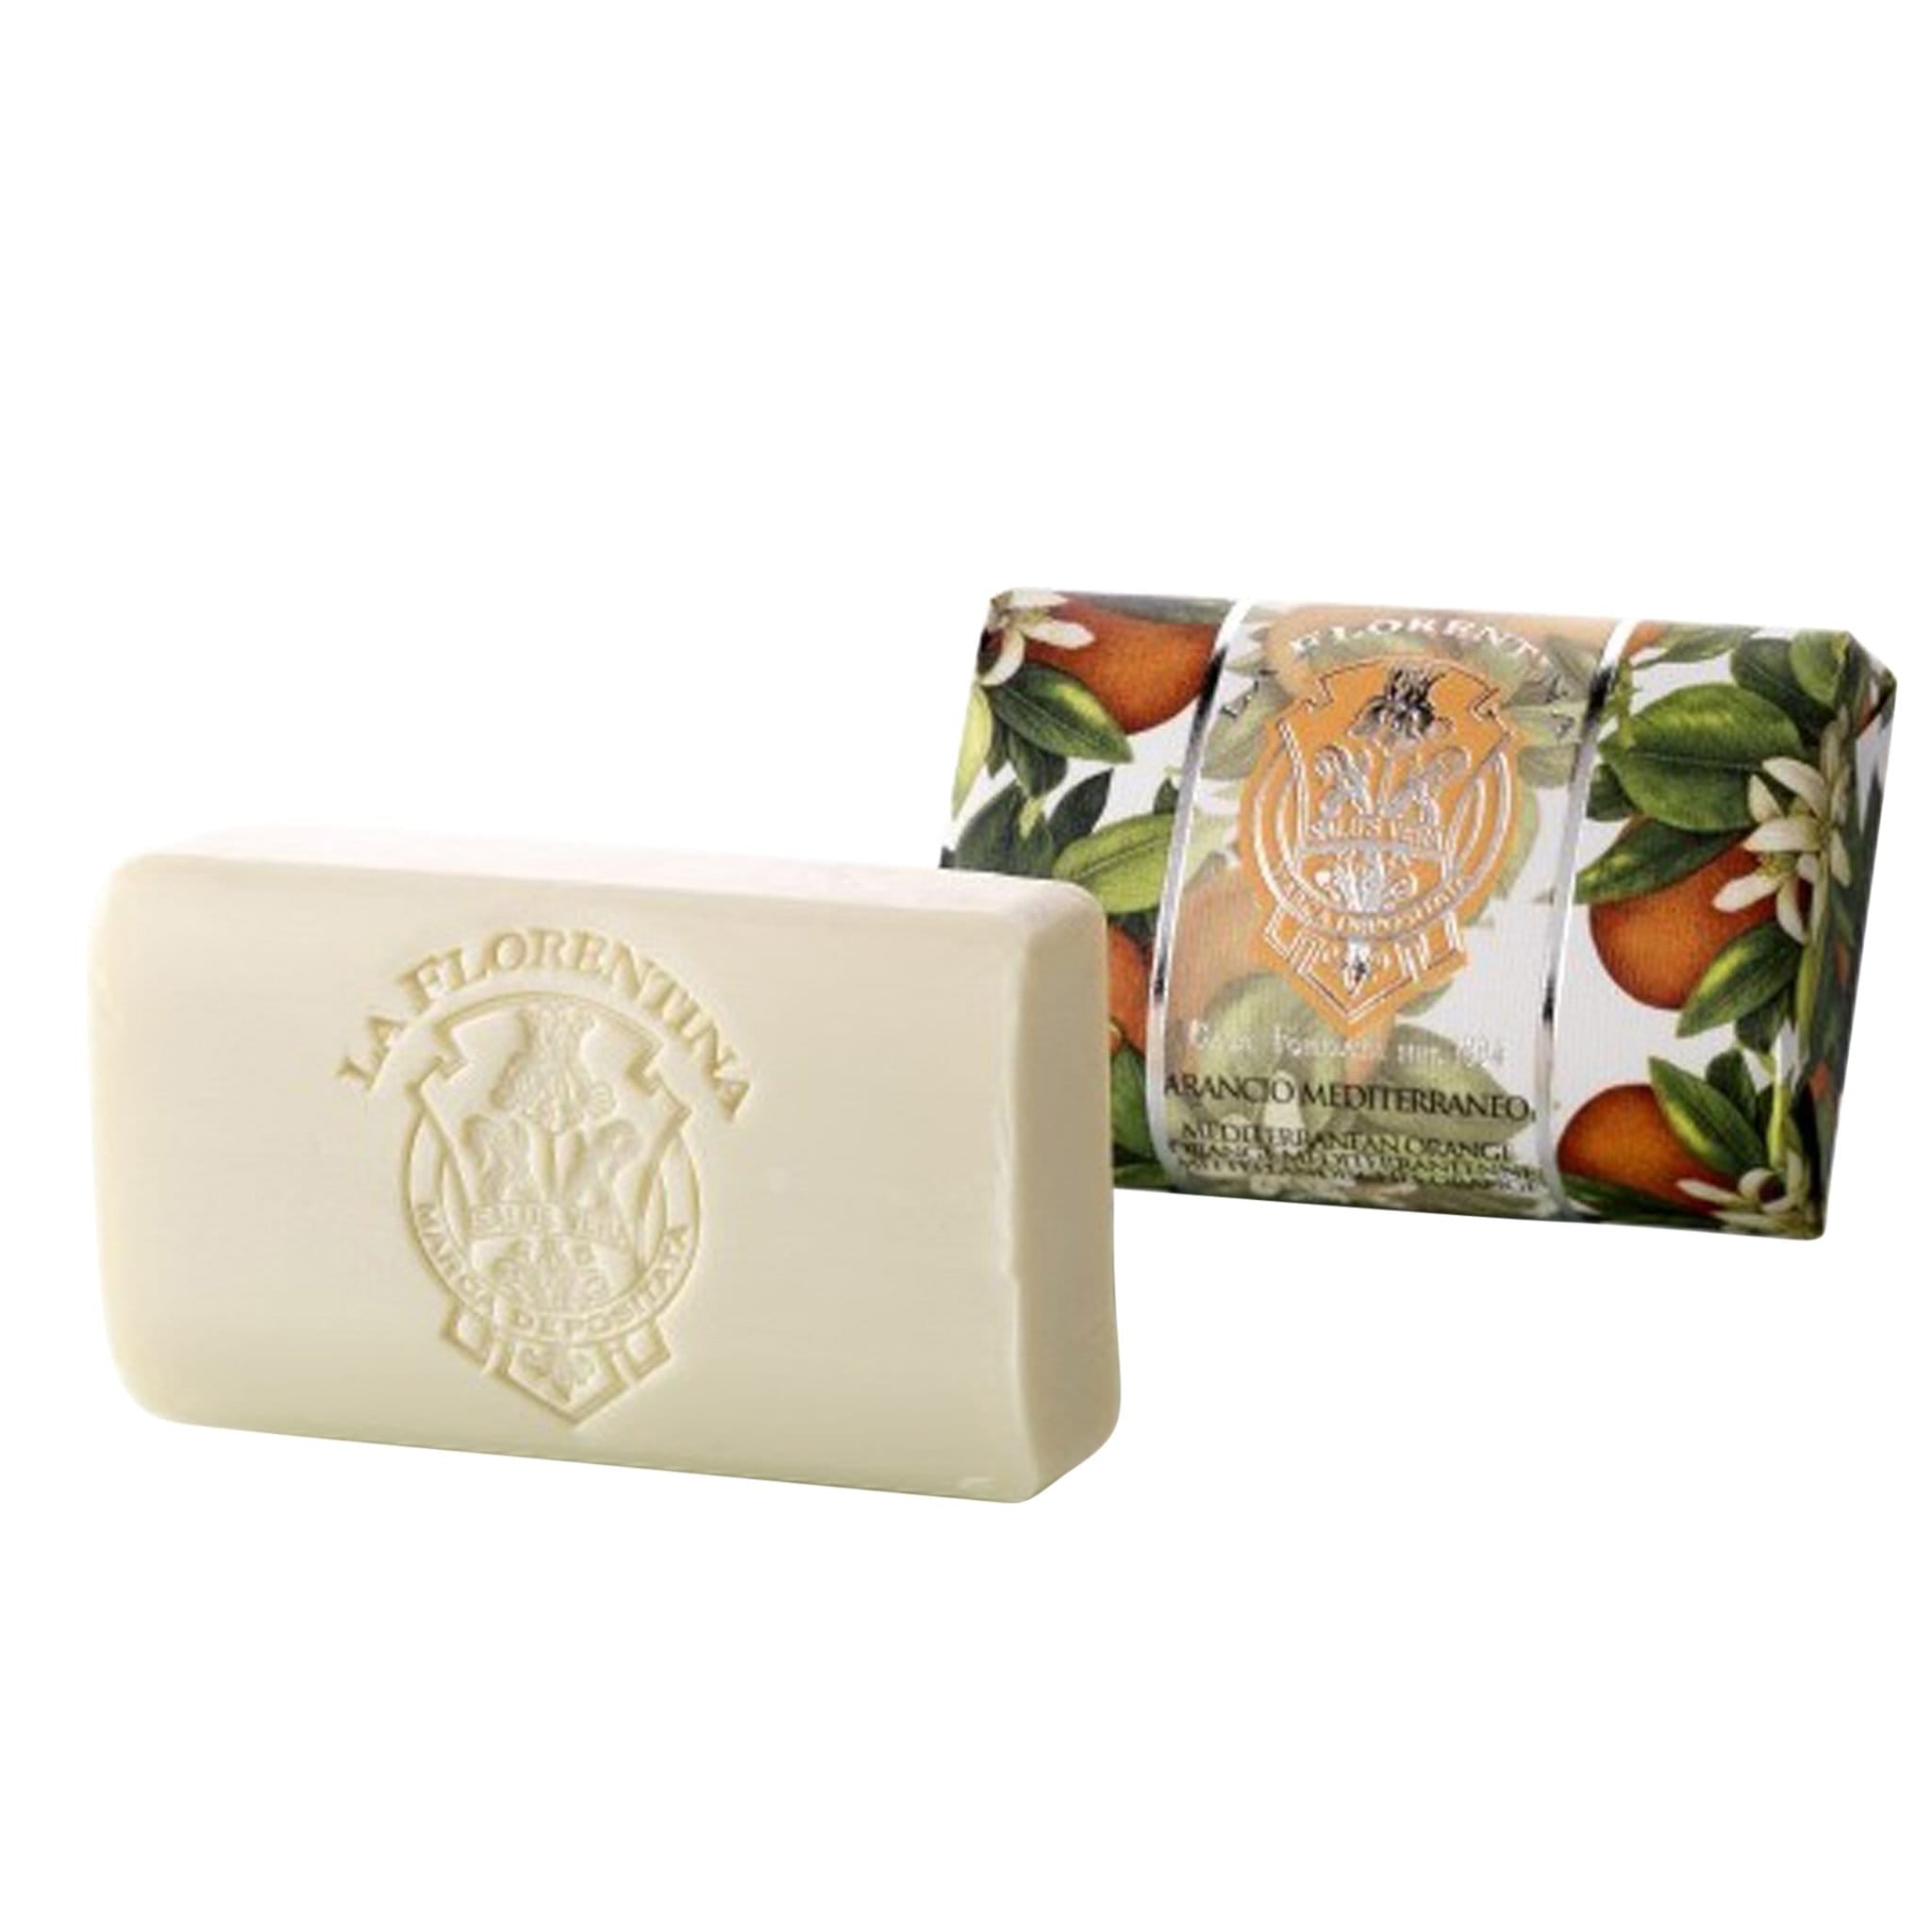 Italian Luxury Group Gift Set La Florentina Bar Soap 200G 2x Mixed - Pay for 10Pcs Get 12Pcs Brand